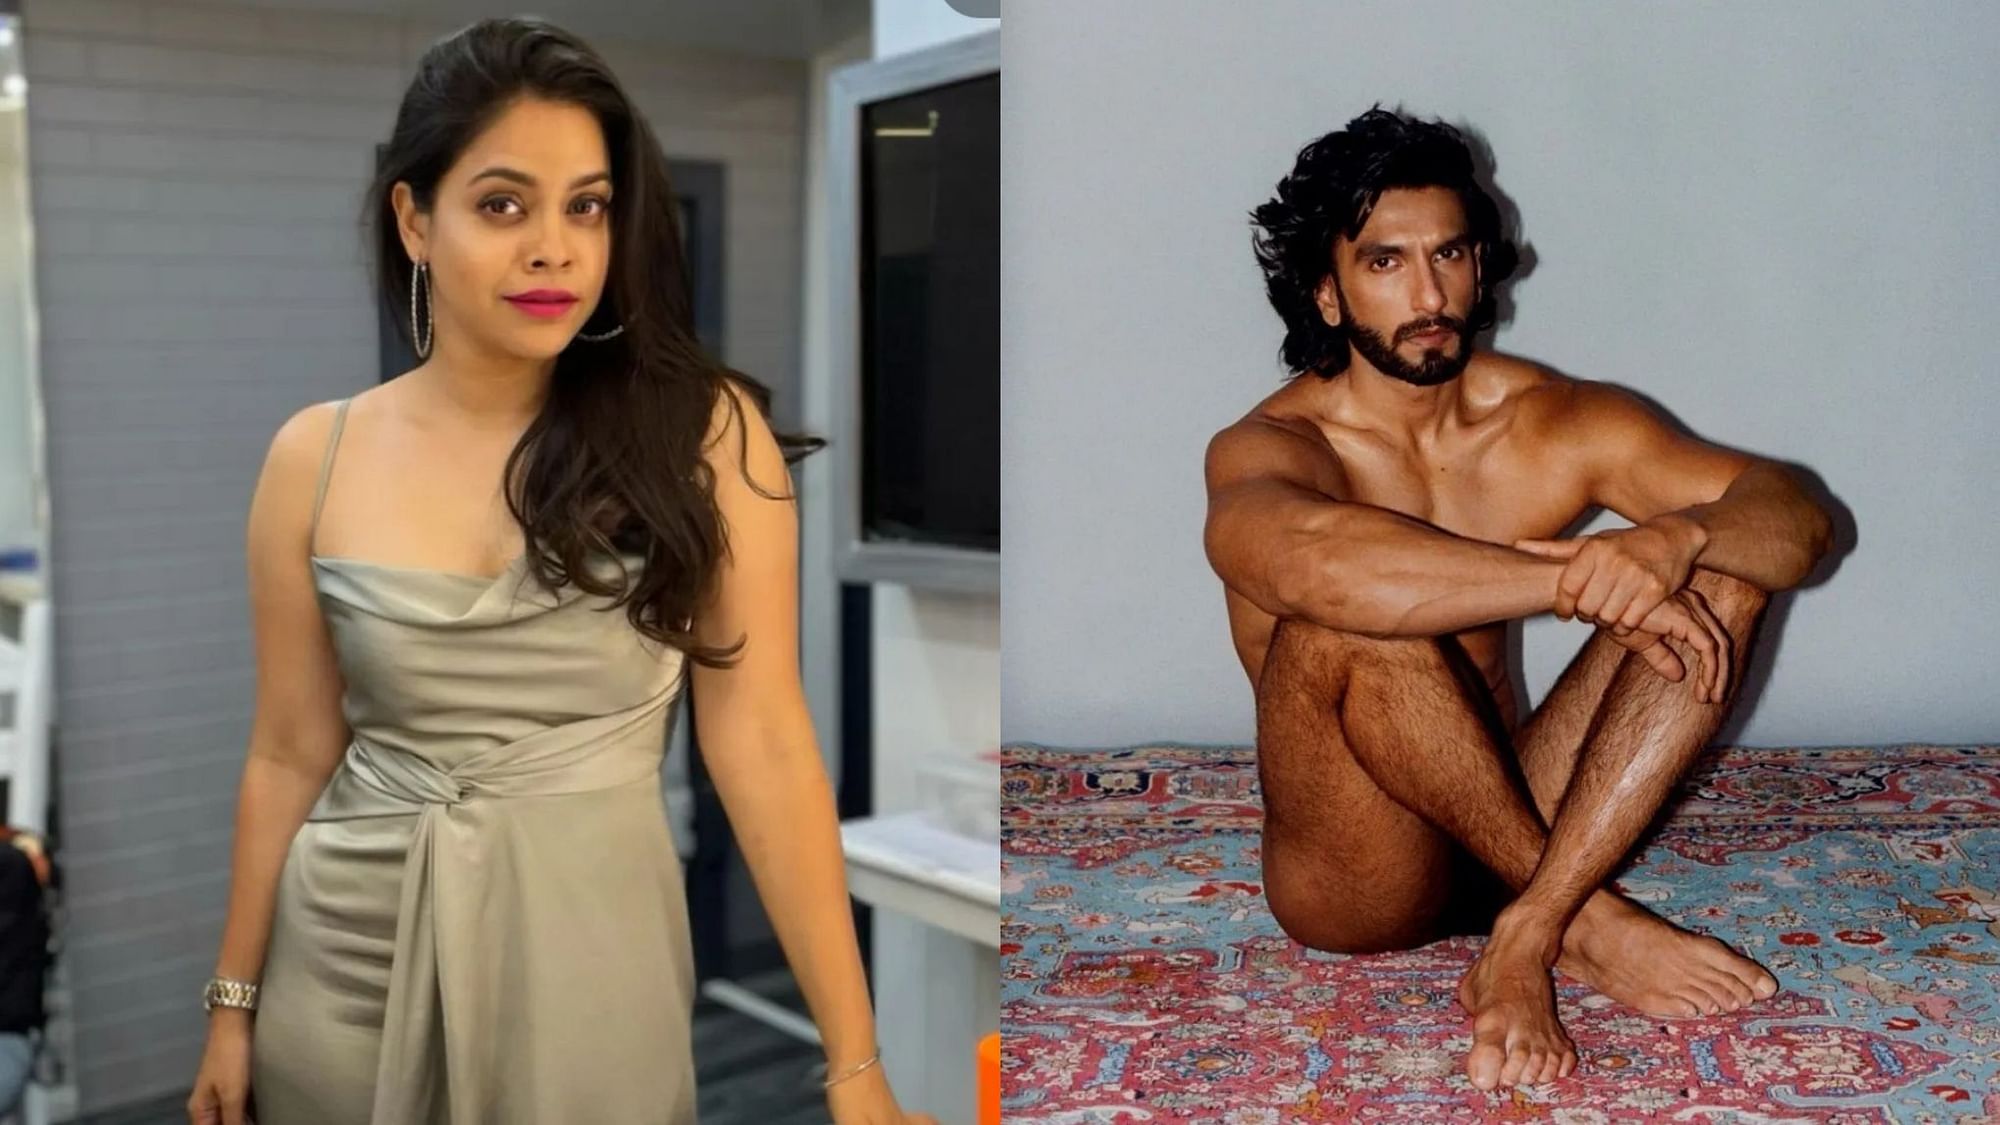 <div class="paragraphs"><p>Sumona Chakravarti speaks in support of Ranveer Singh's nude photoshoot.</p></div>